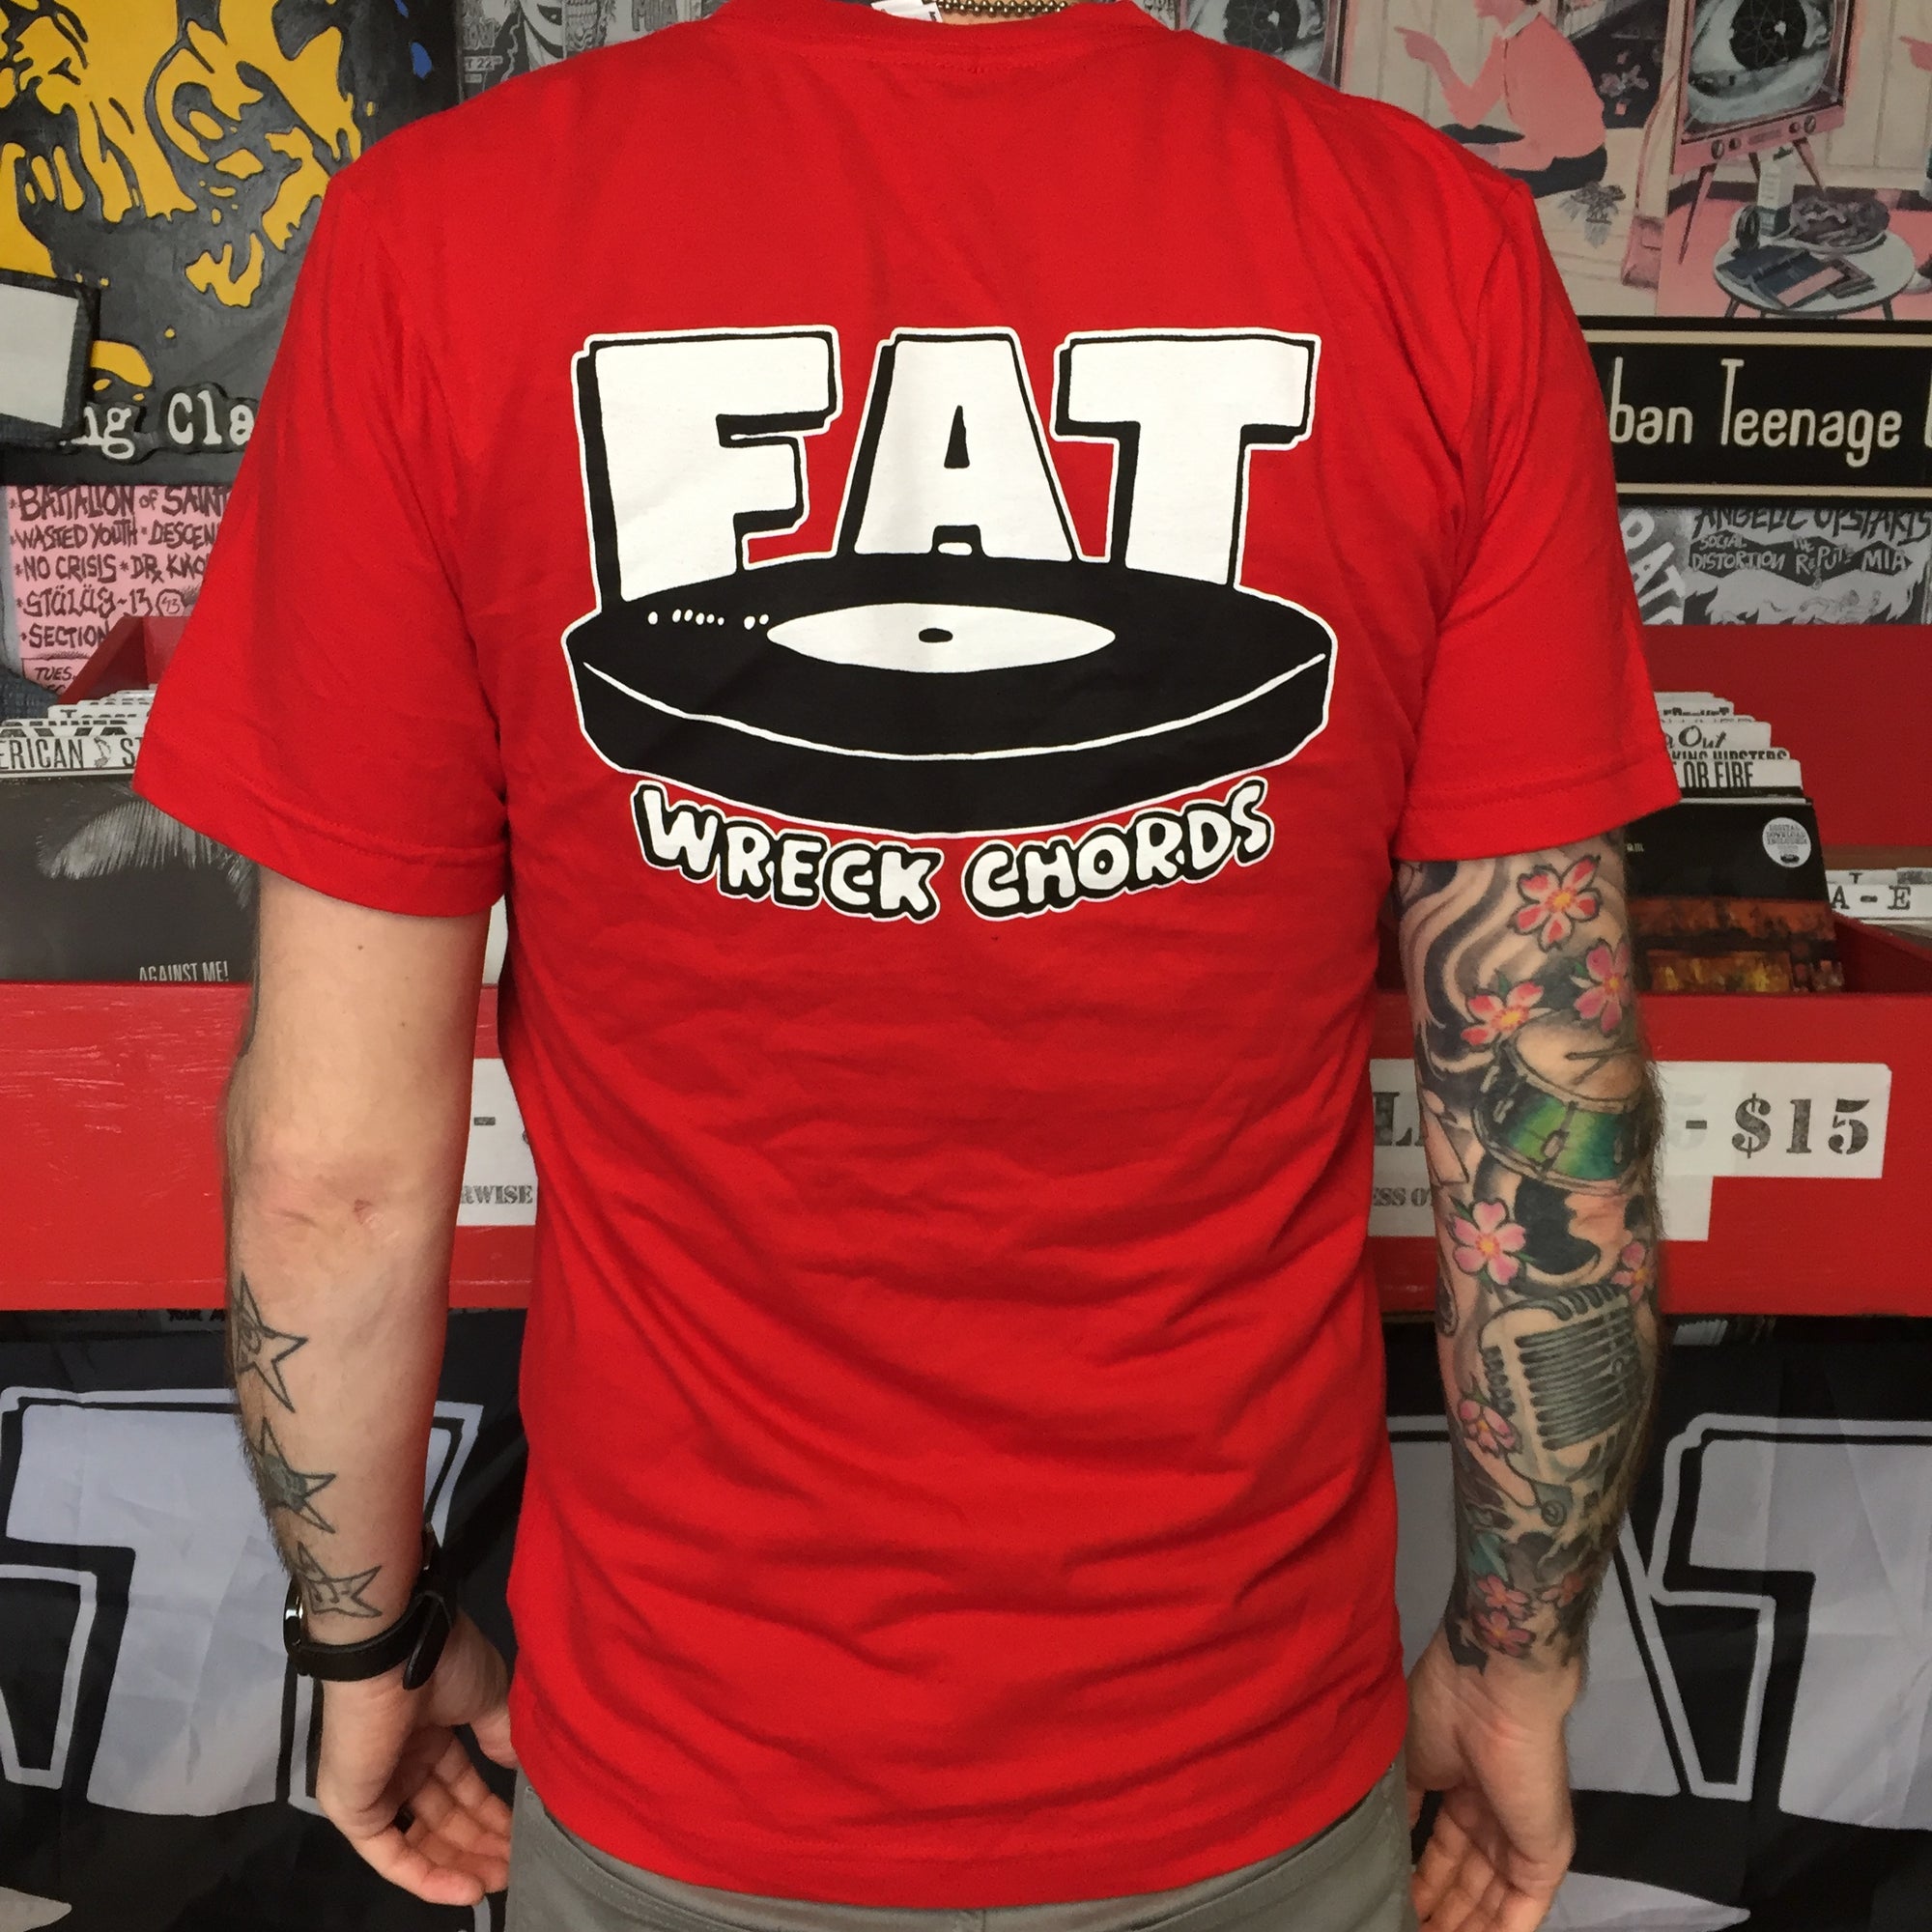 Fat Logo Shirt RED